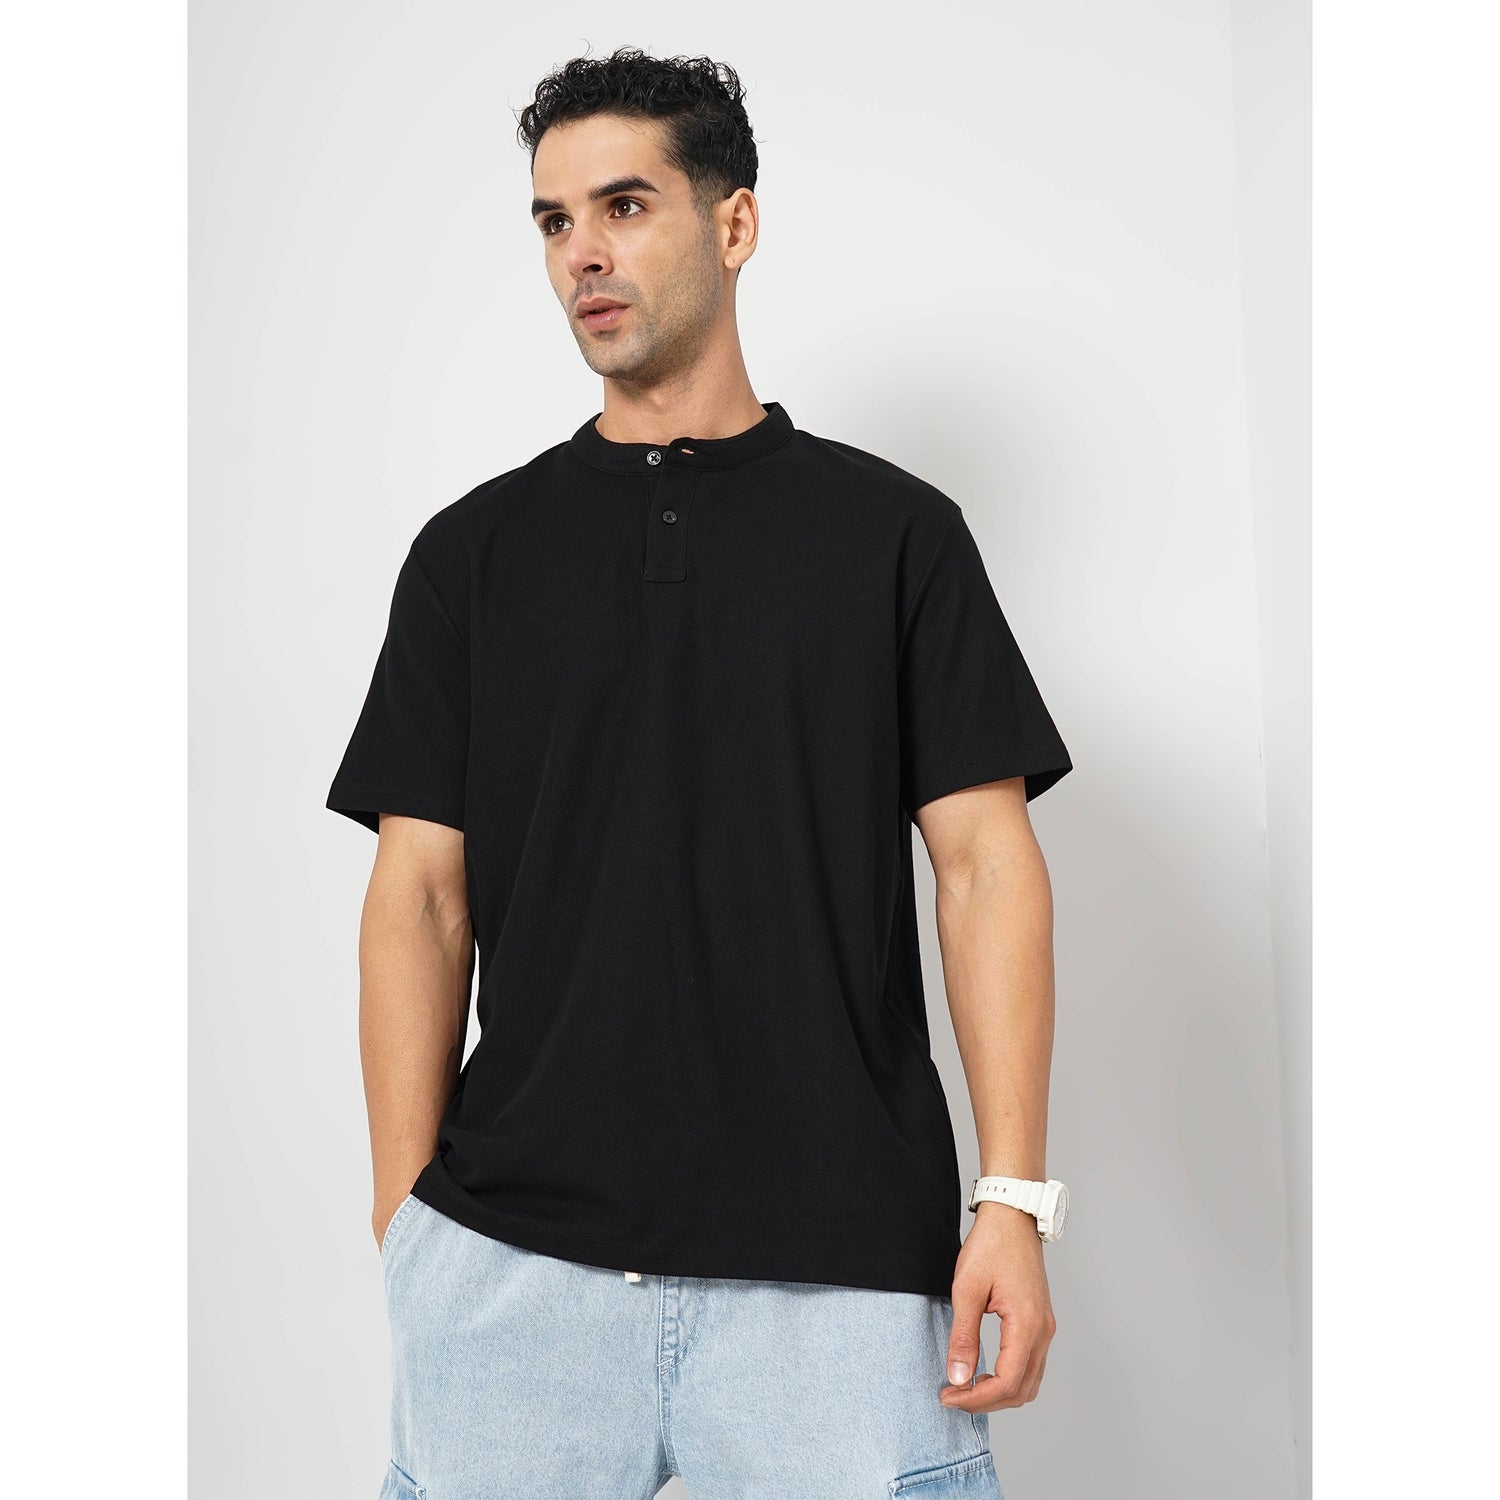 Men's Black Solid Regular Fit Cotton Tshirts (GESOHEL)